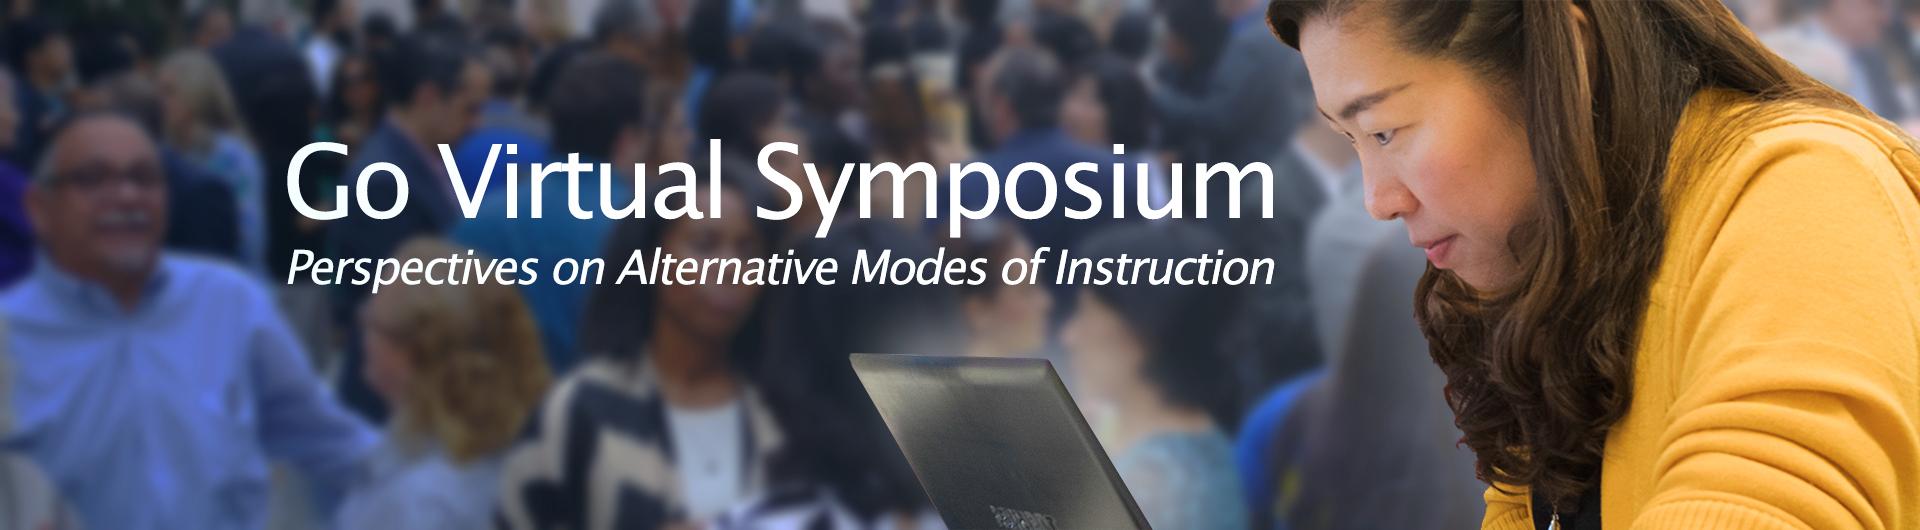 Go virtual symposium perspectives on alternative modes of instruction